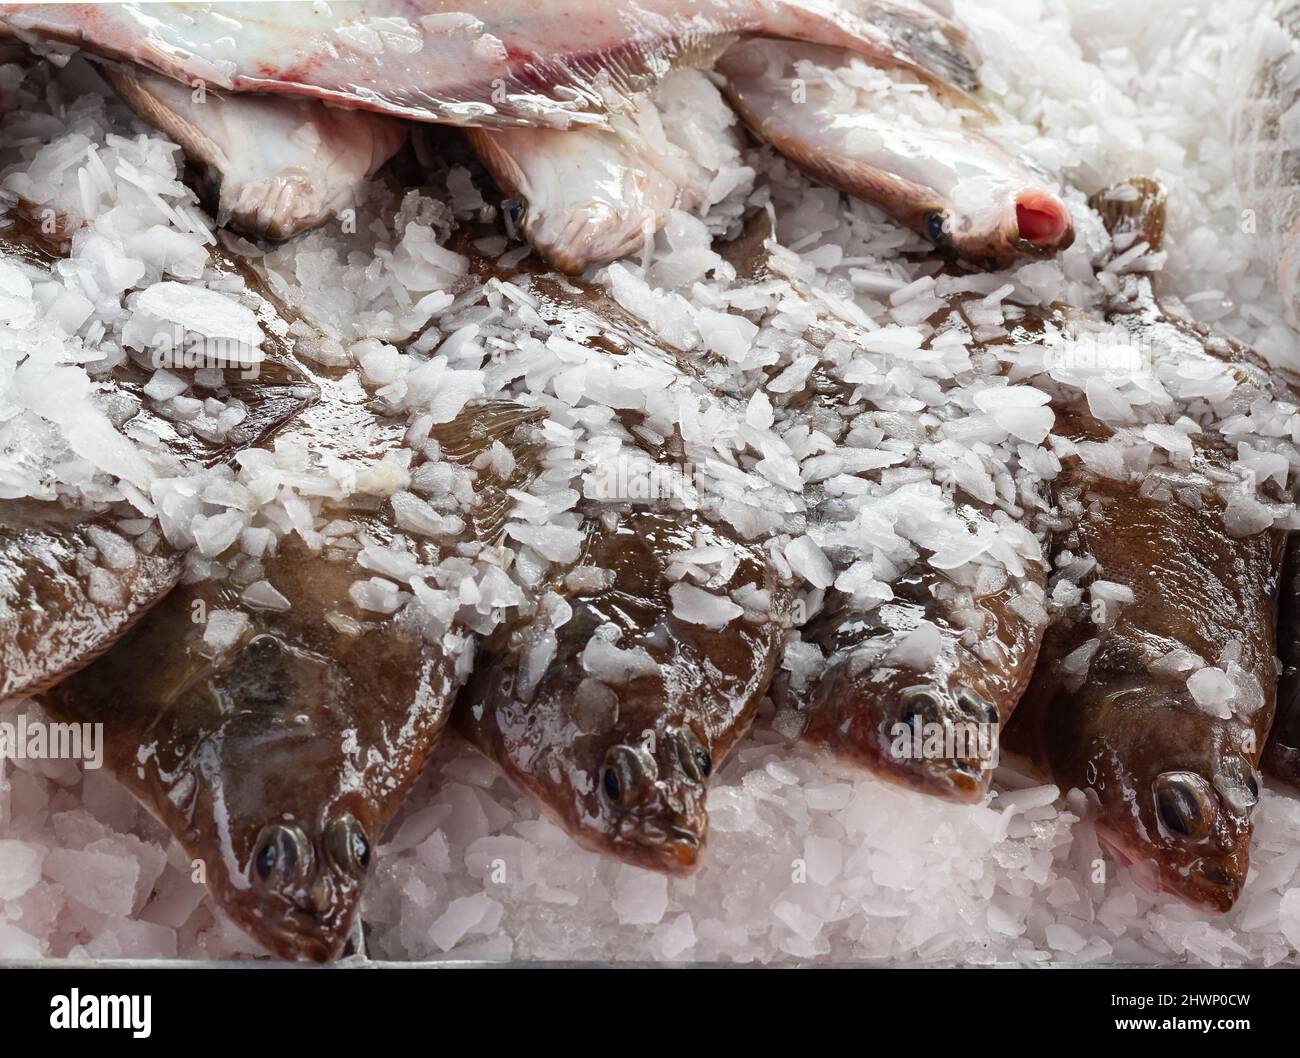 Closeup of fresh cooled whole raw fish on ice. Market Shelf fresh fish arrange in ice. Street photo, no people, selective focus Stock Photo